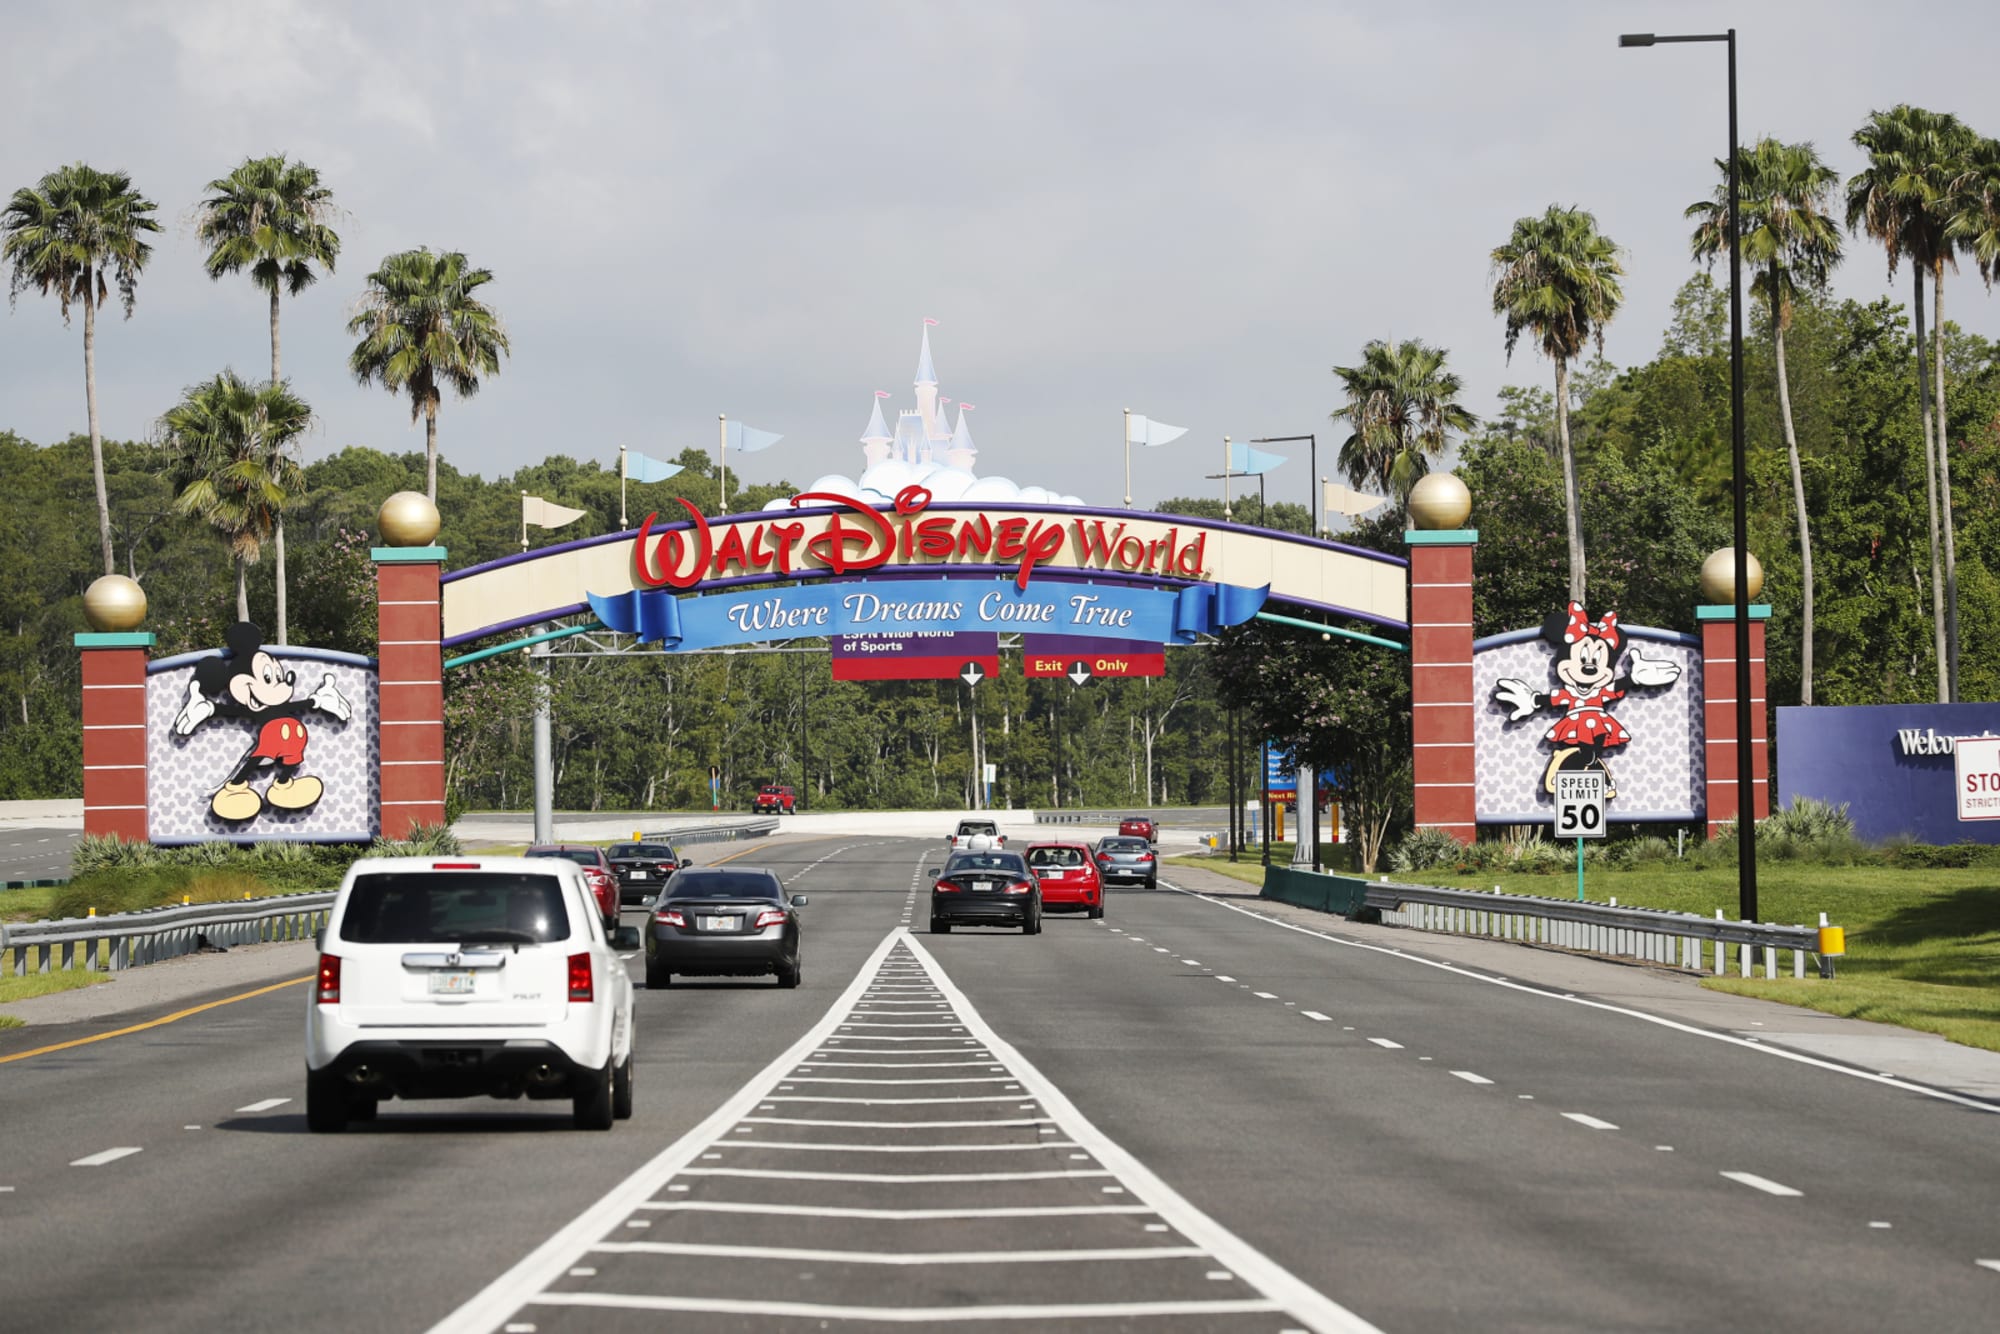 Walt Disney World to cancel airport shuttles starting in 2022